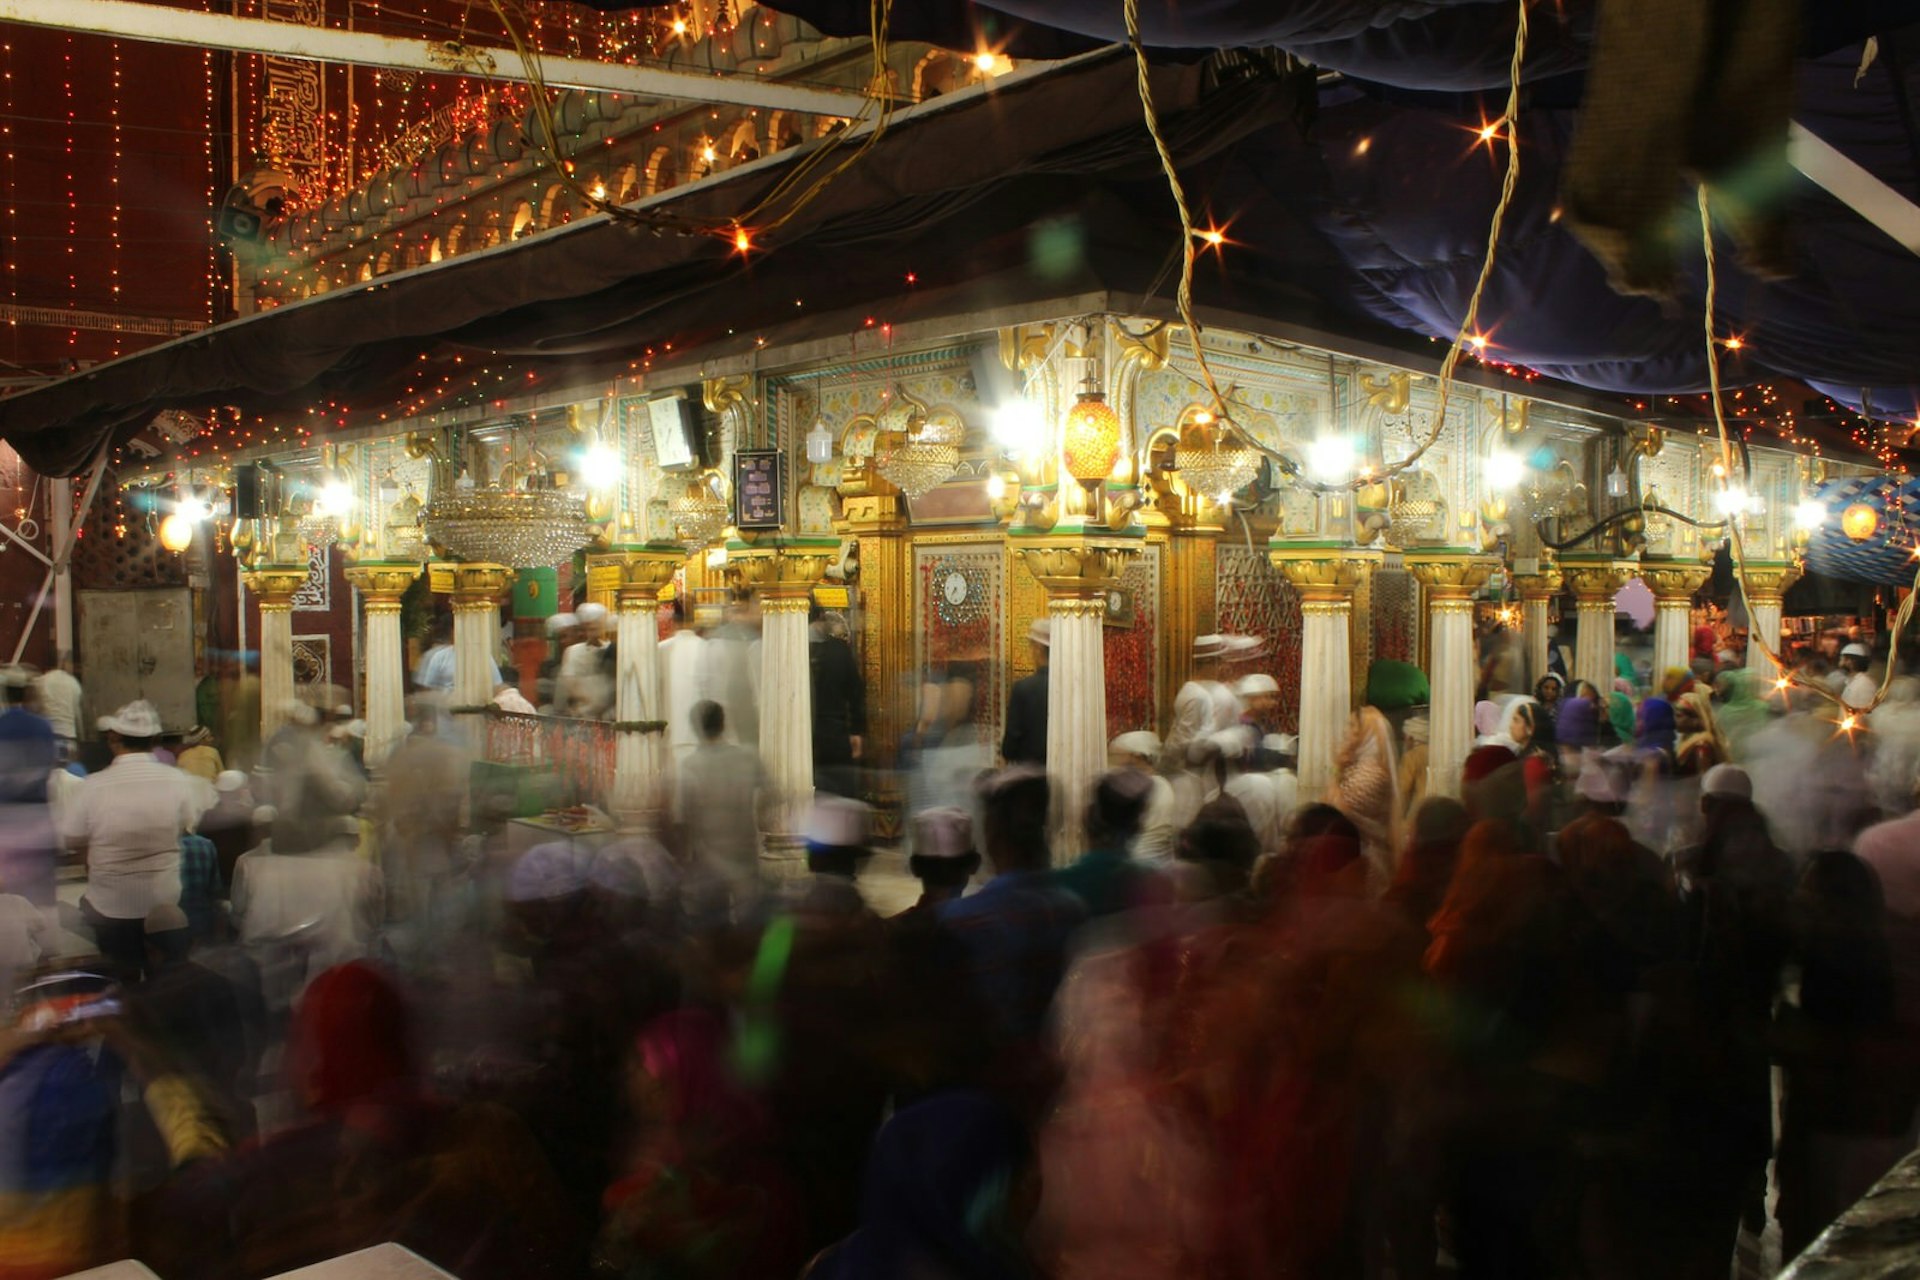 Hazrat Nizamuddin Dargah Complex, swarmed by devotees